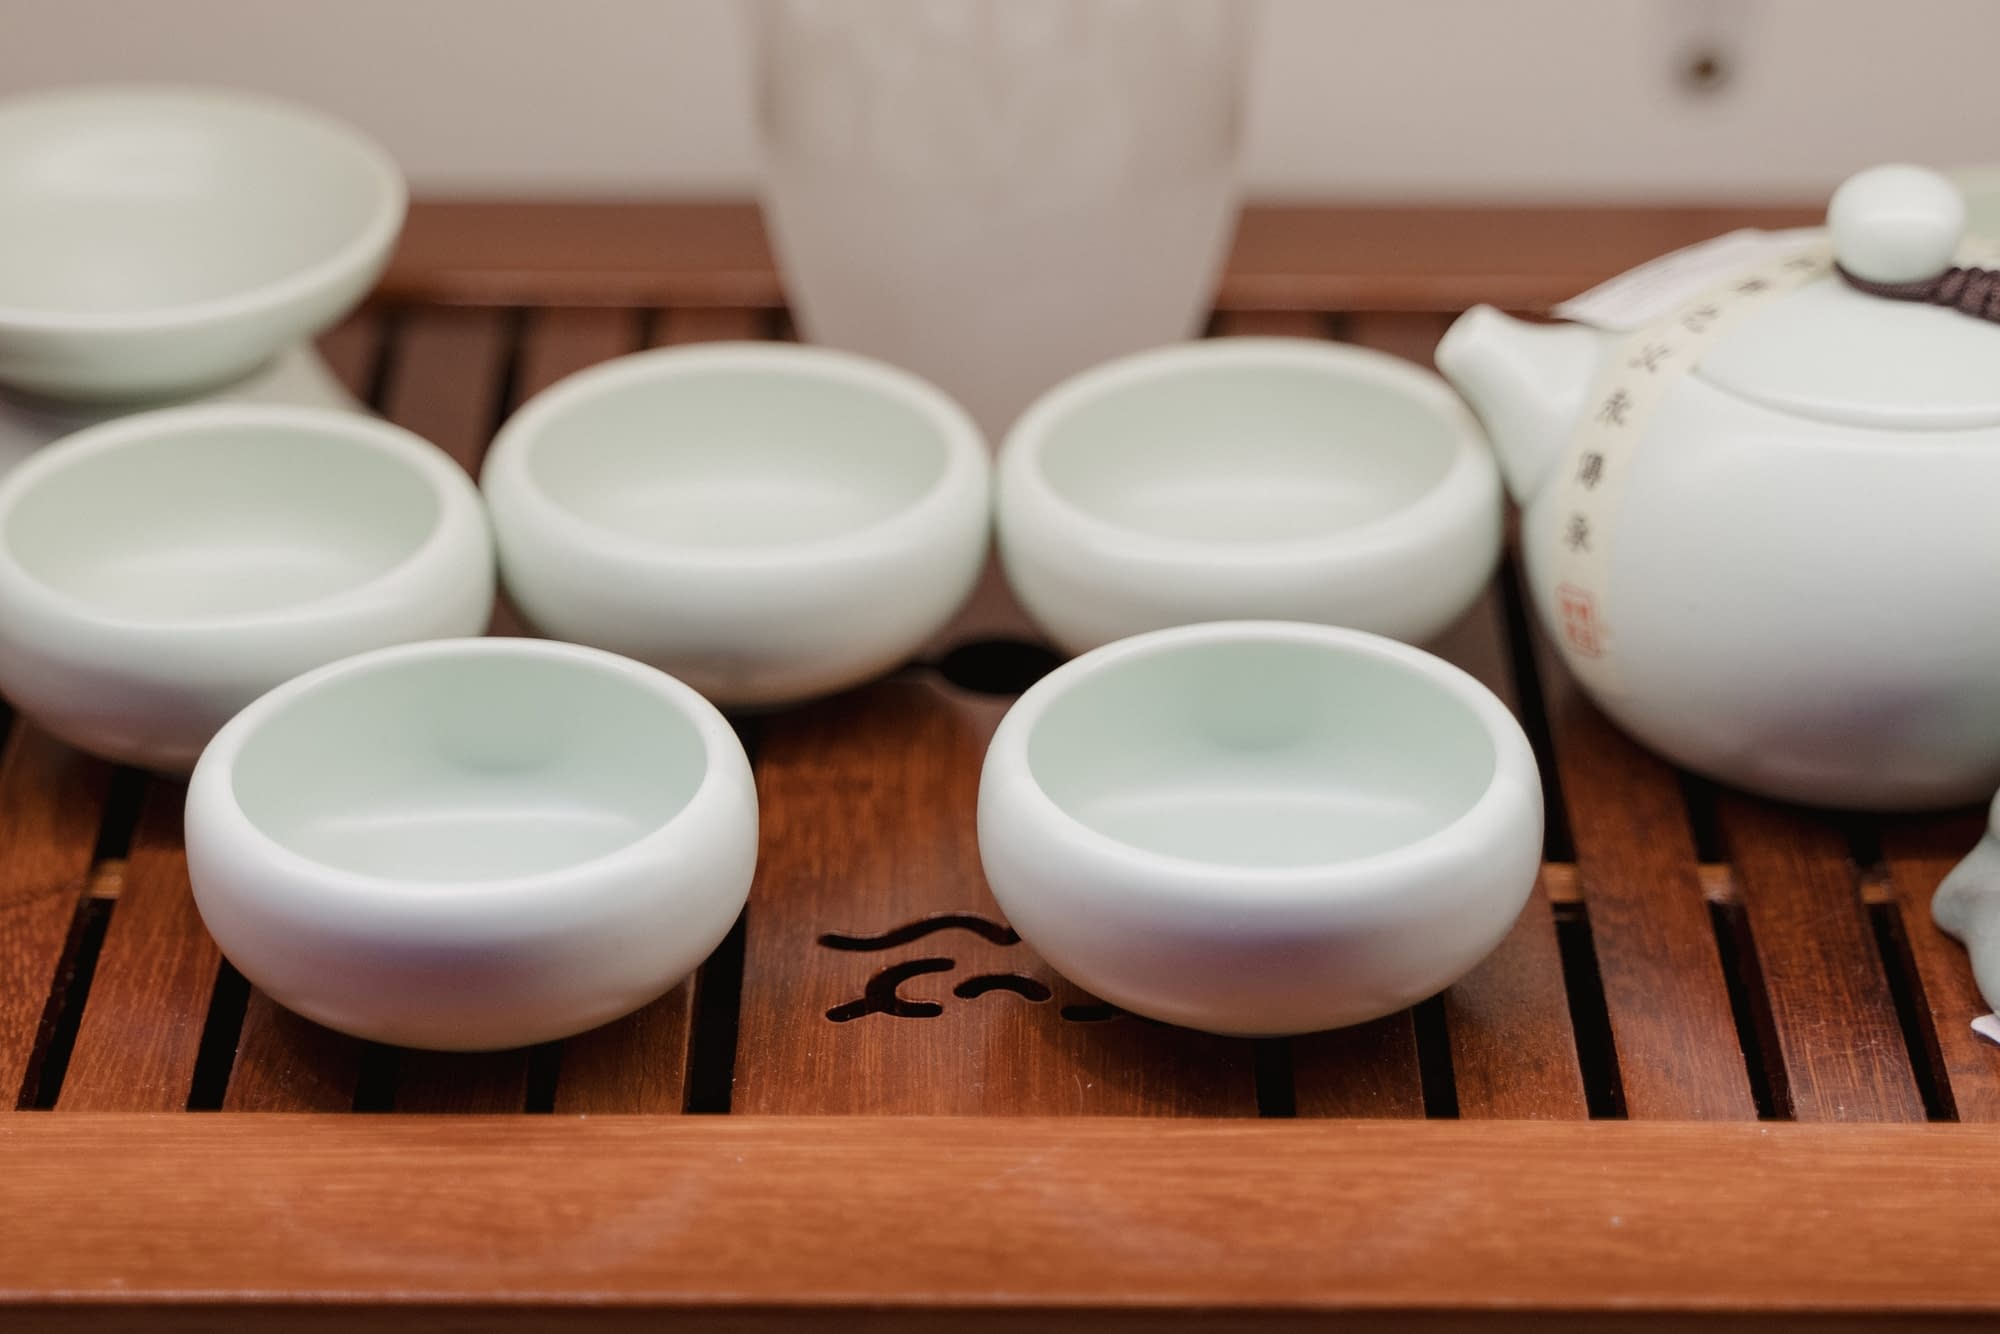 tea ceremony utensils on a tray